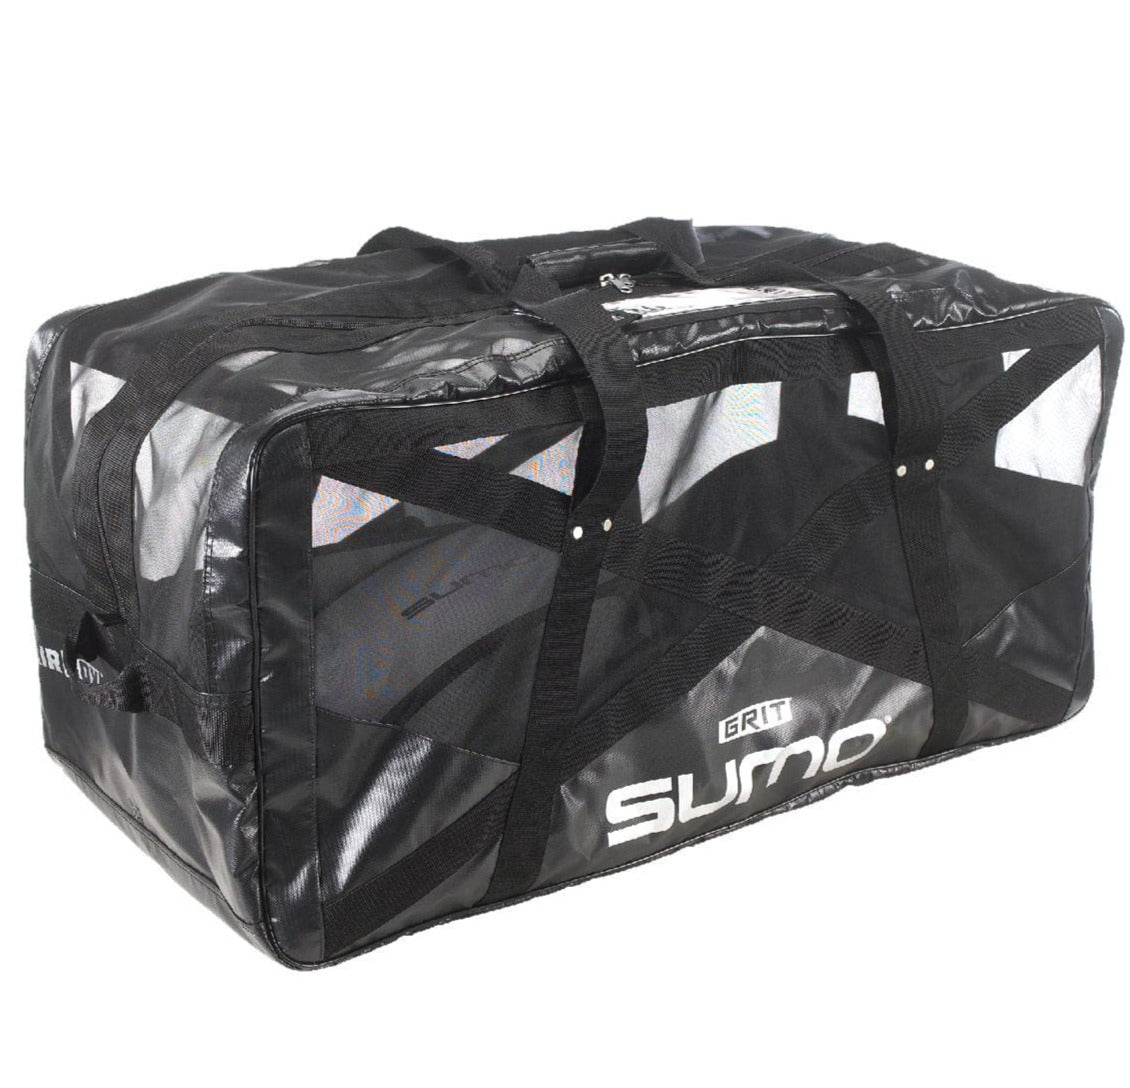 Grit Airbox Sumo Senior Goalie Carry Bag